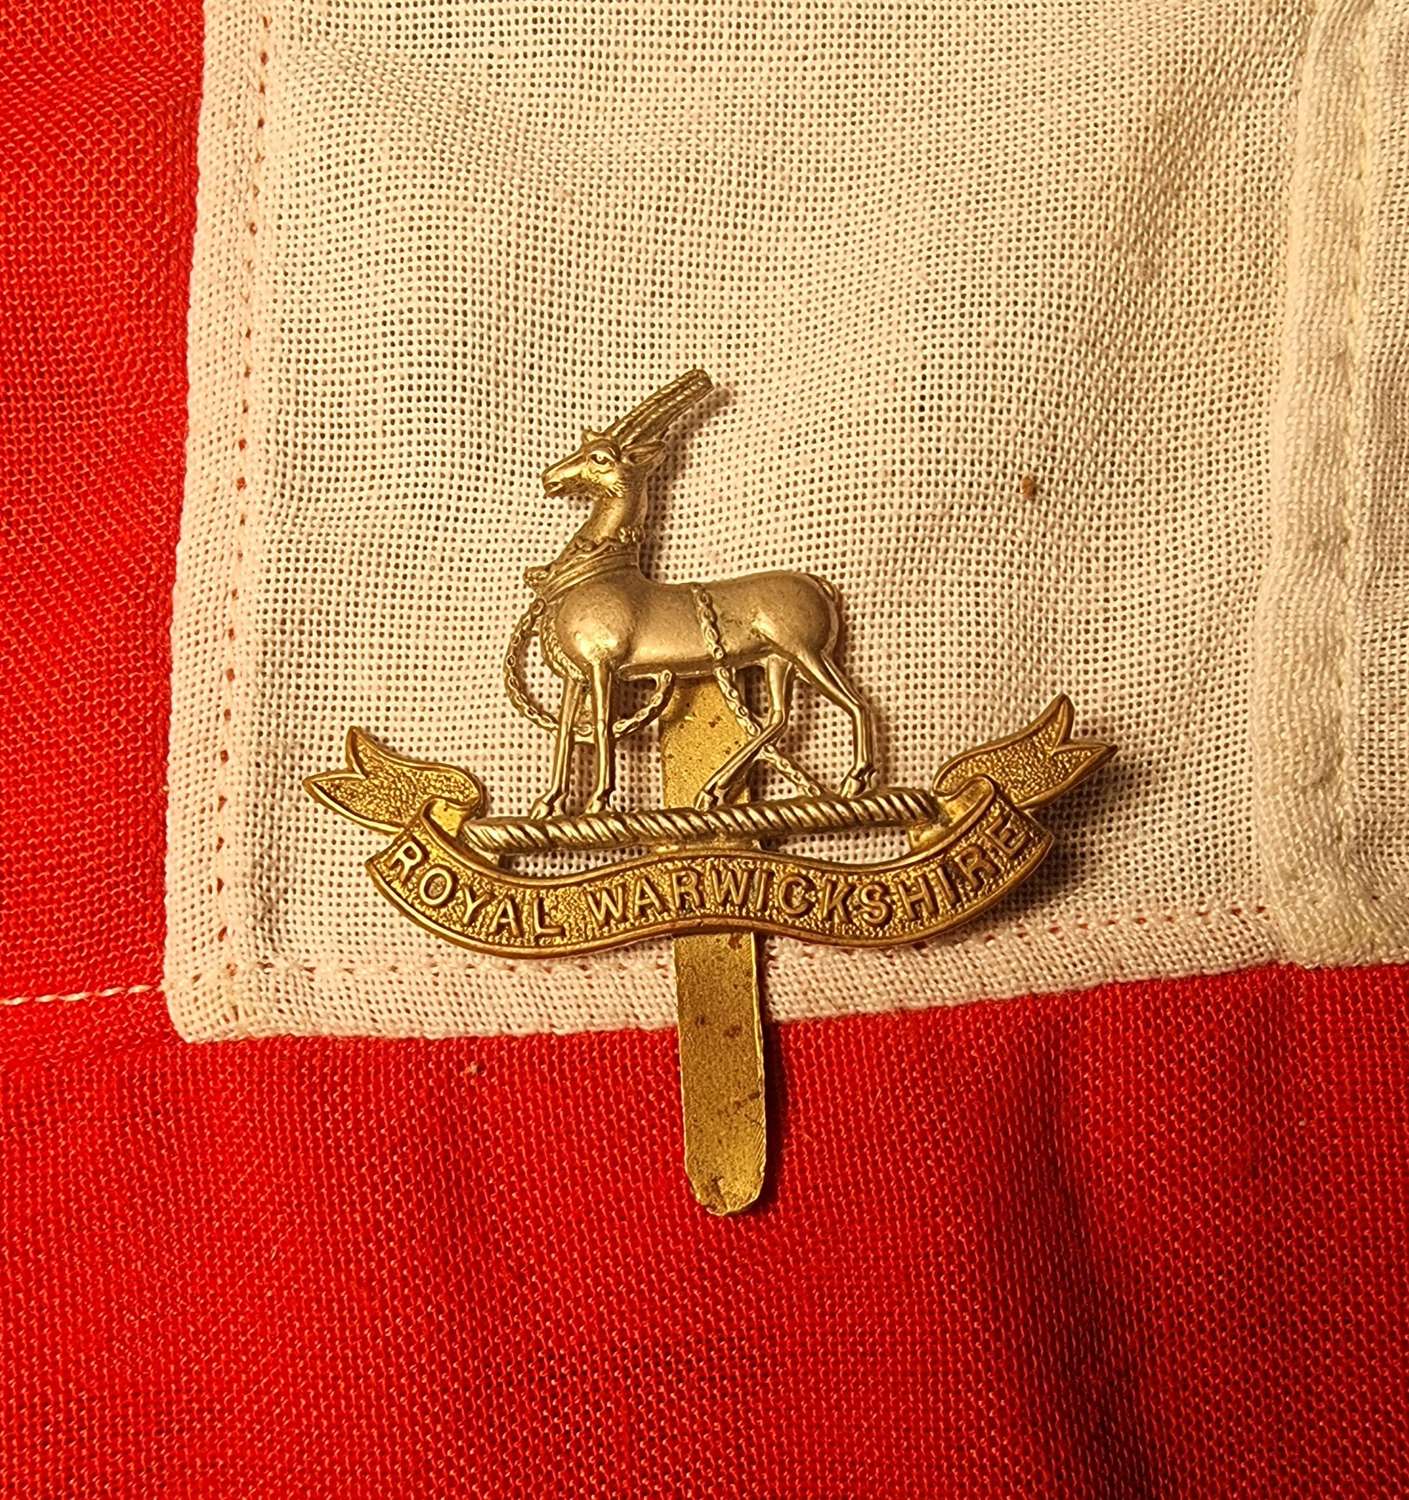 Royal Warwickshire Regt Cap badge